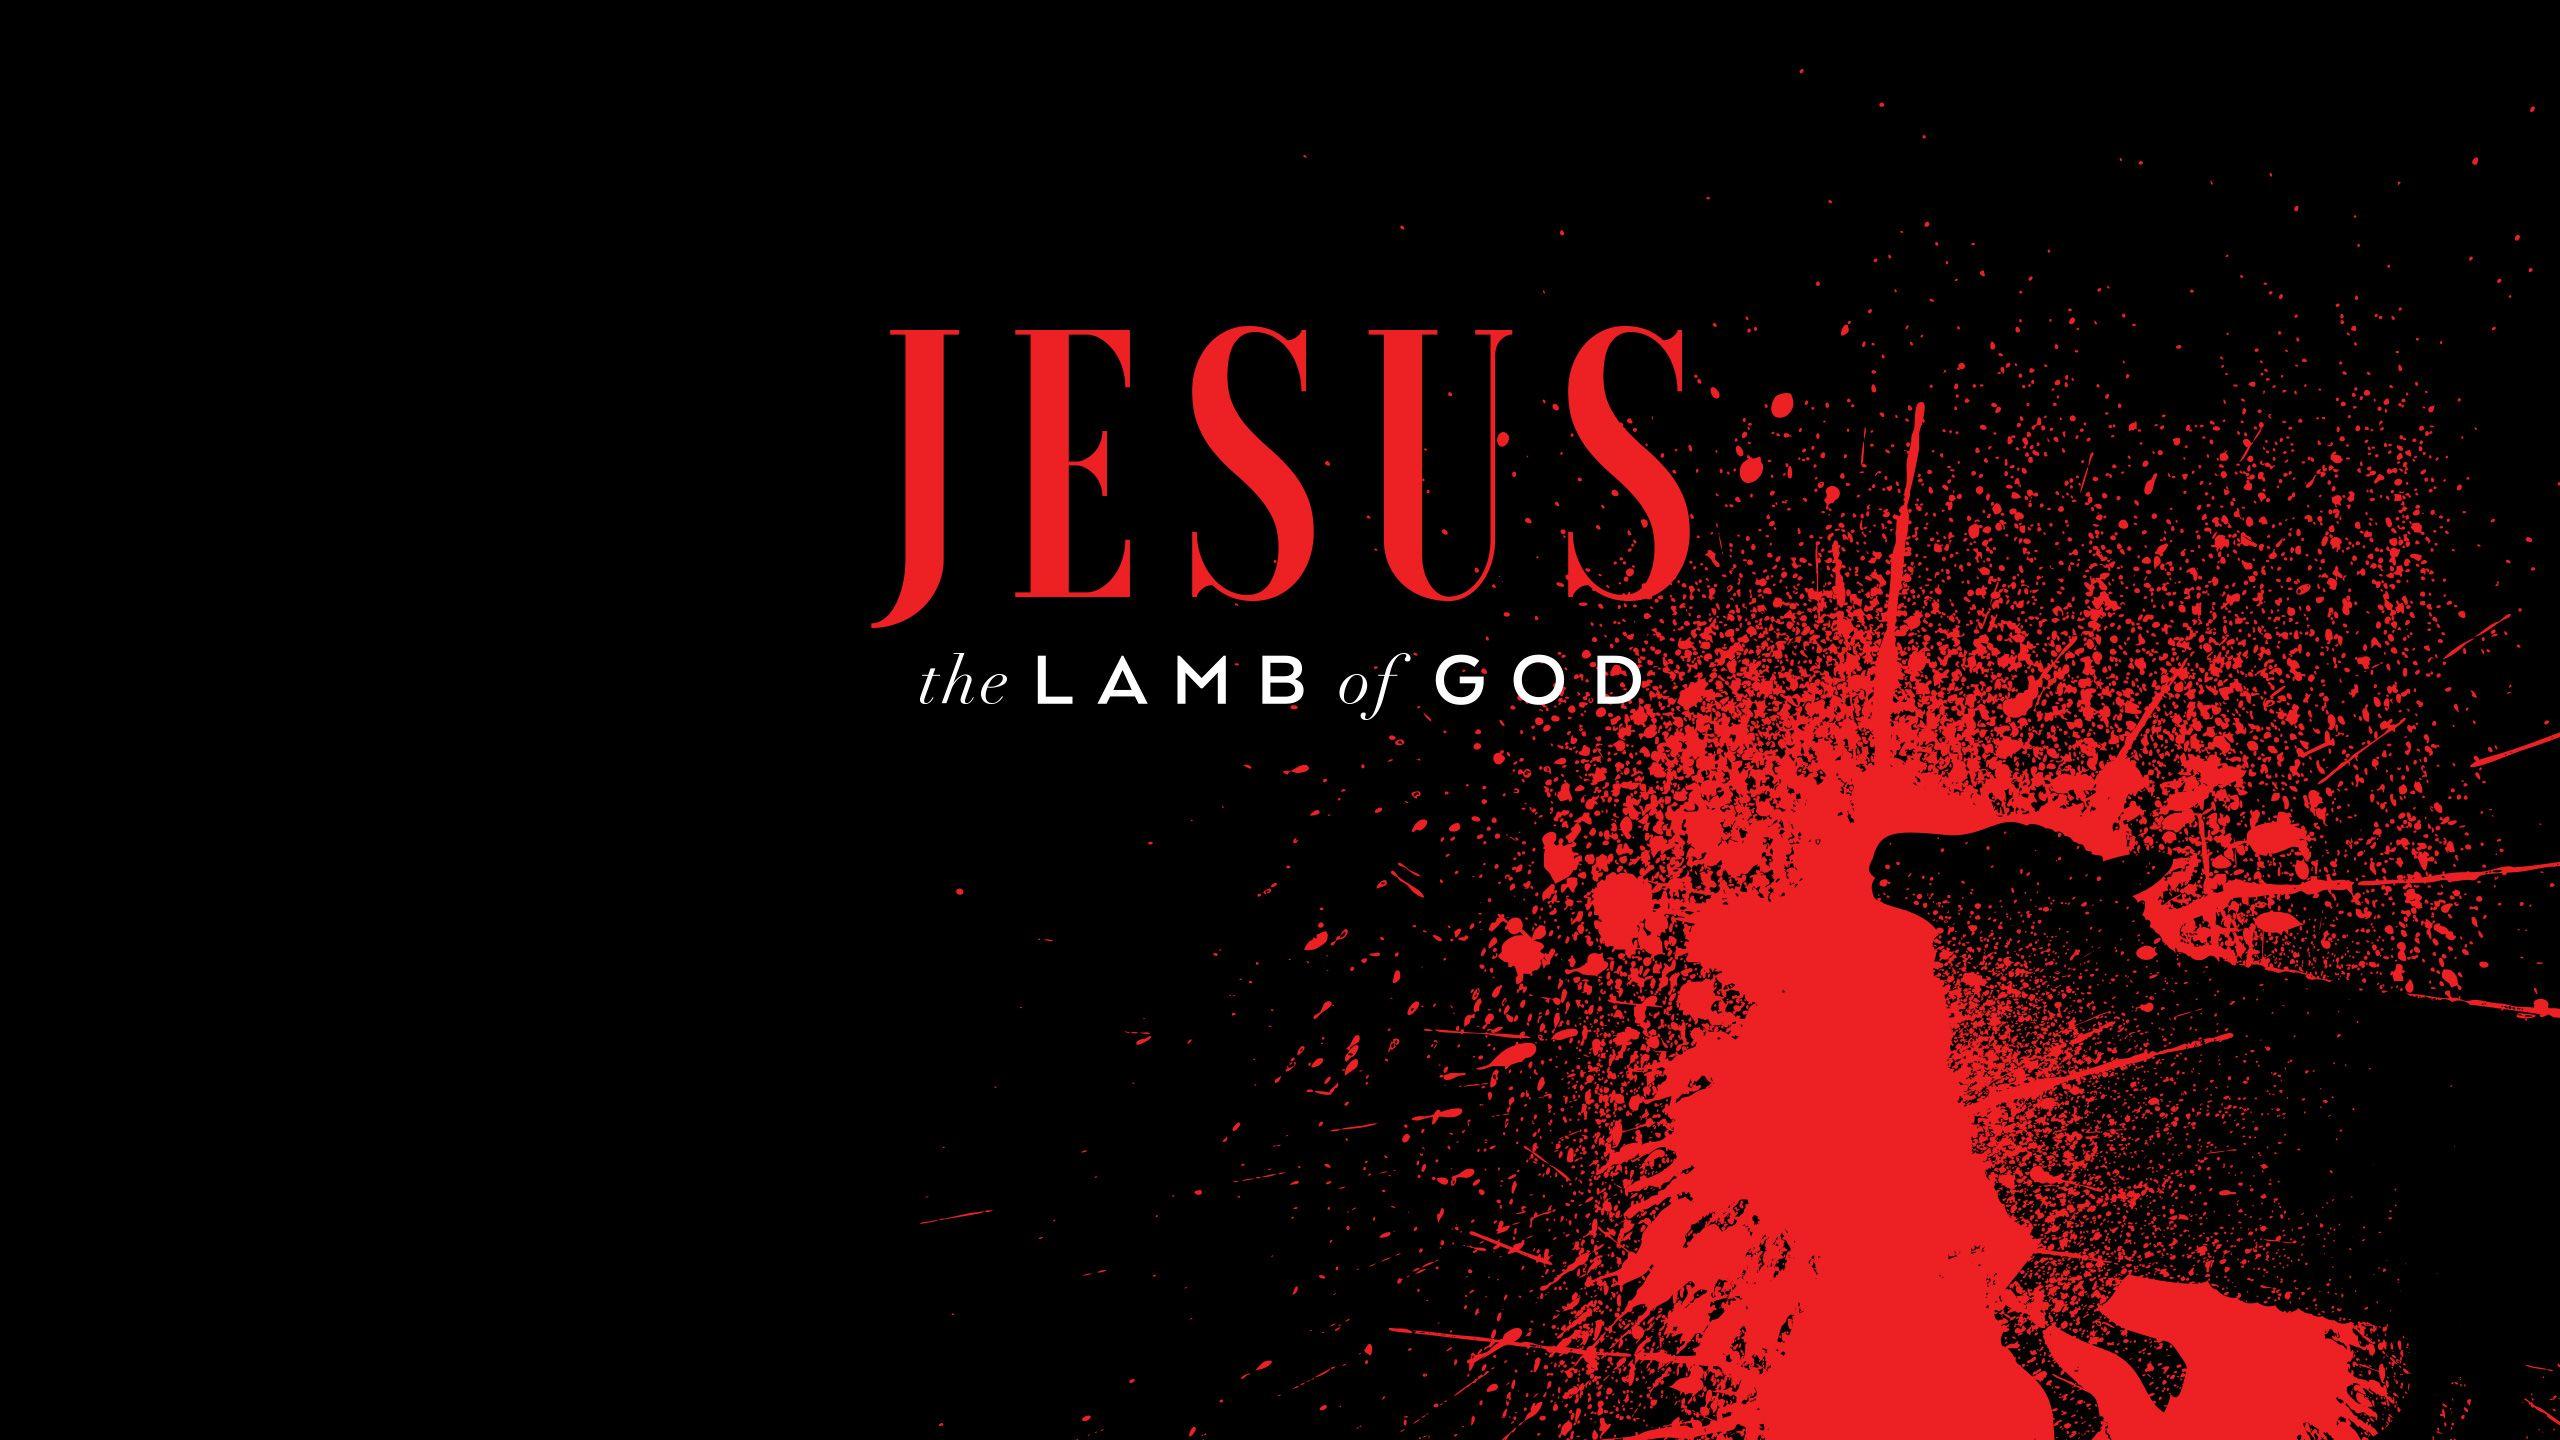 Wednesday Wallpaper: Lamb of God